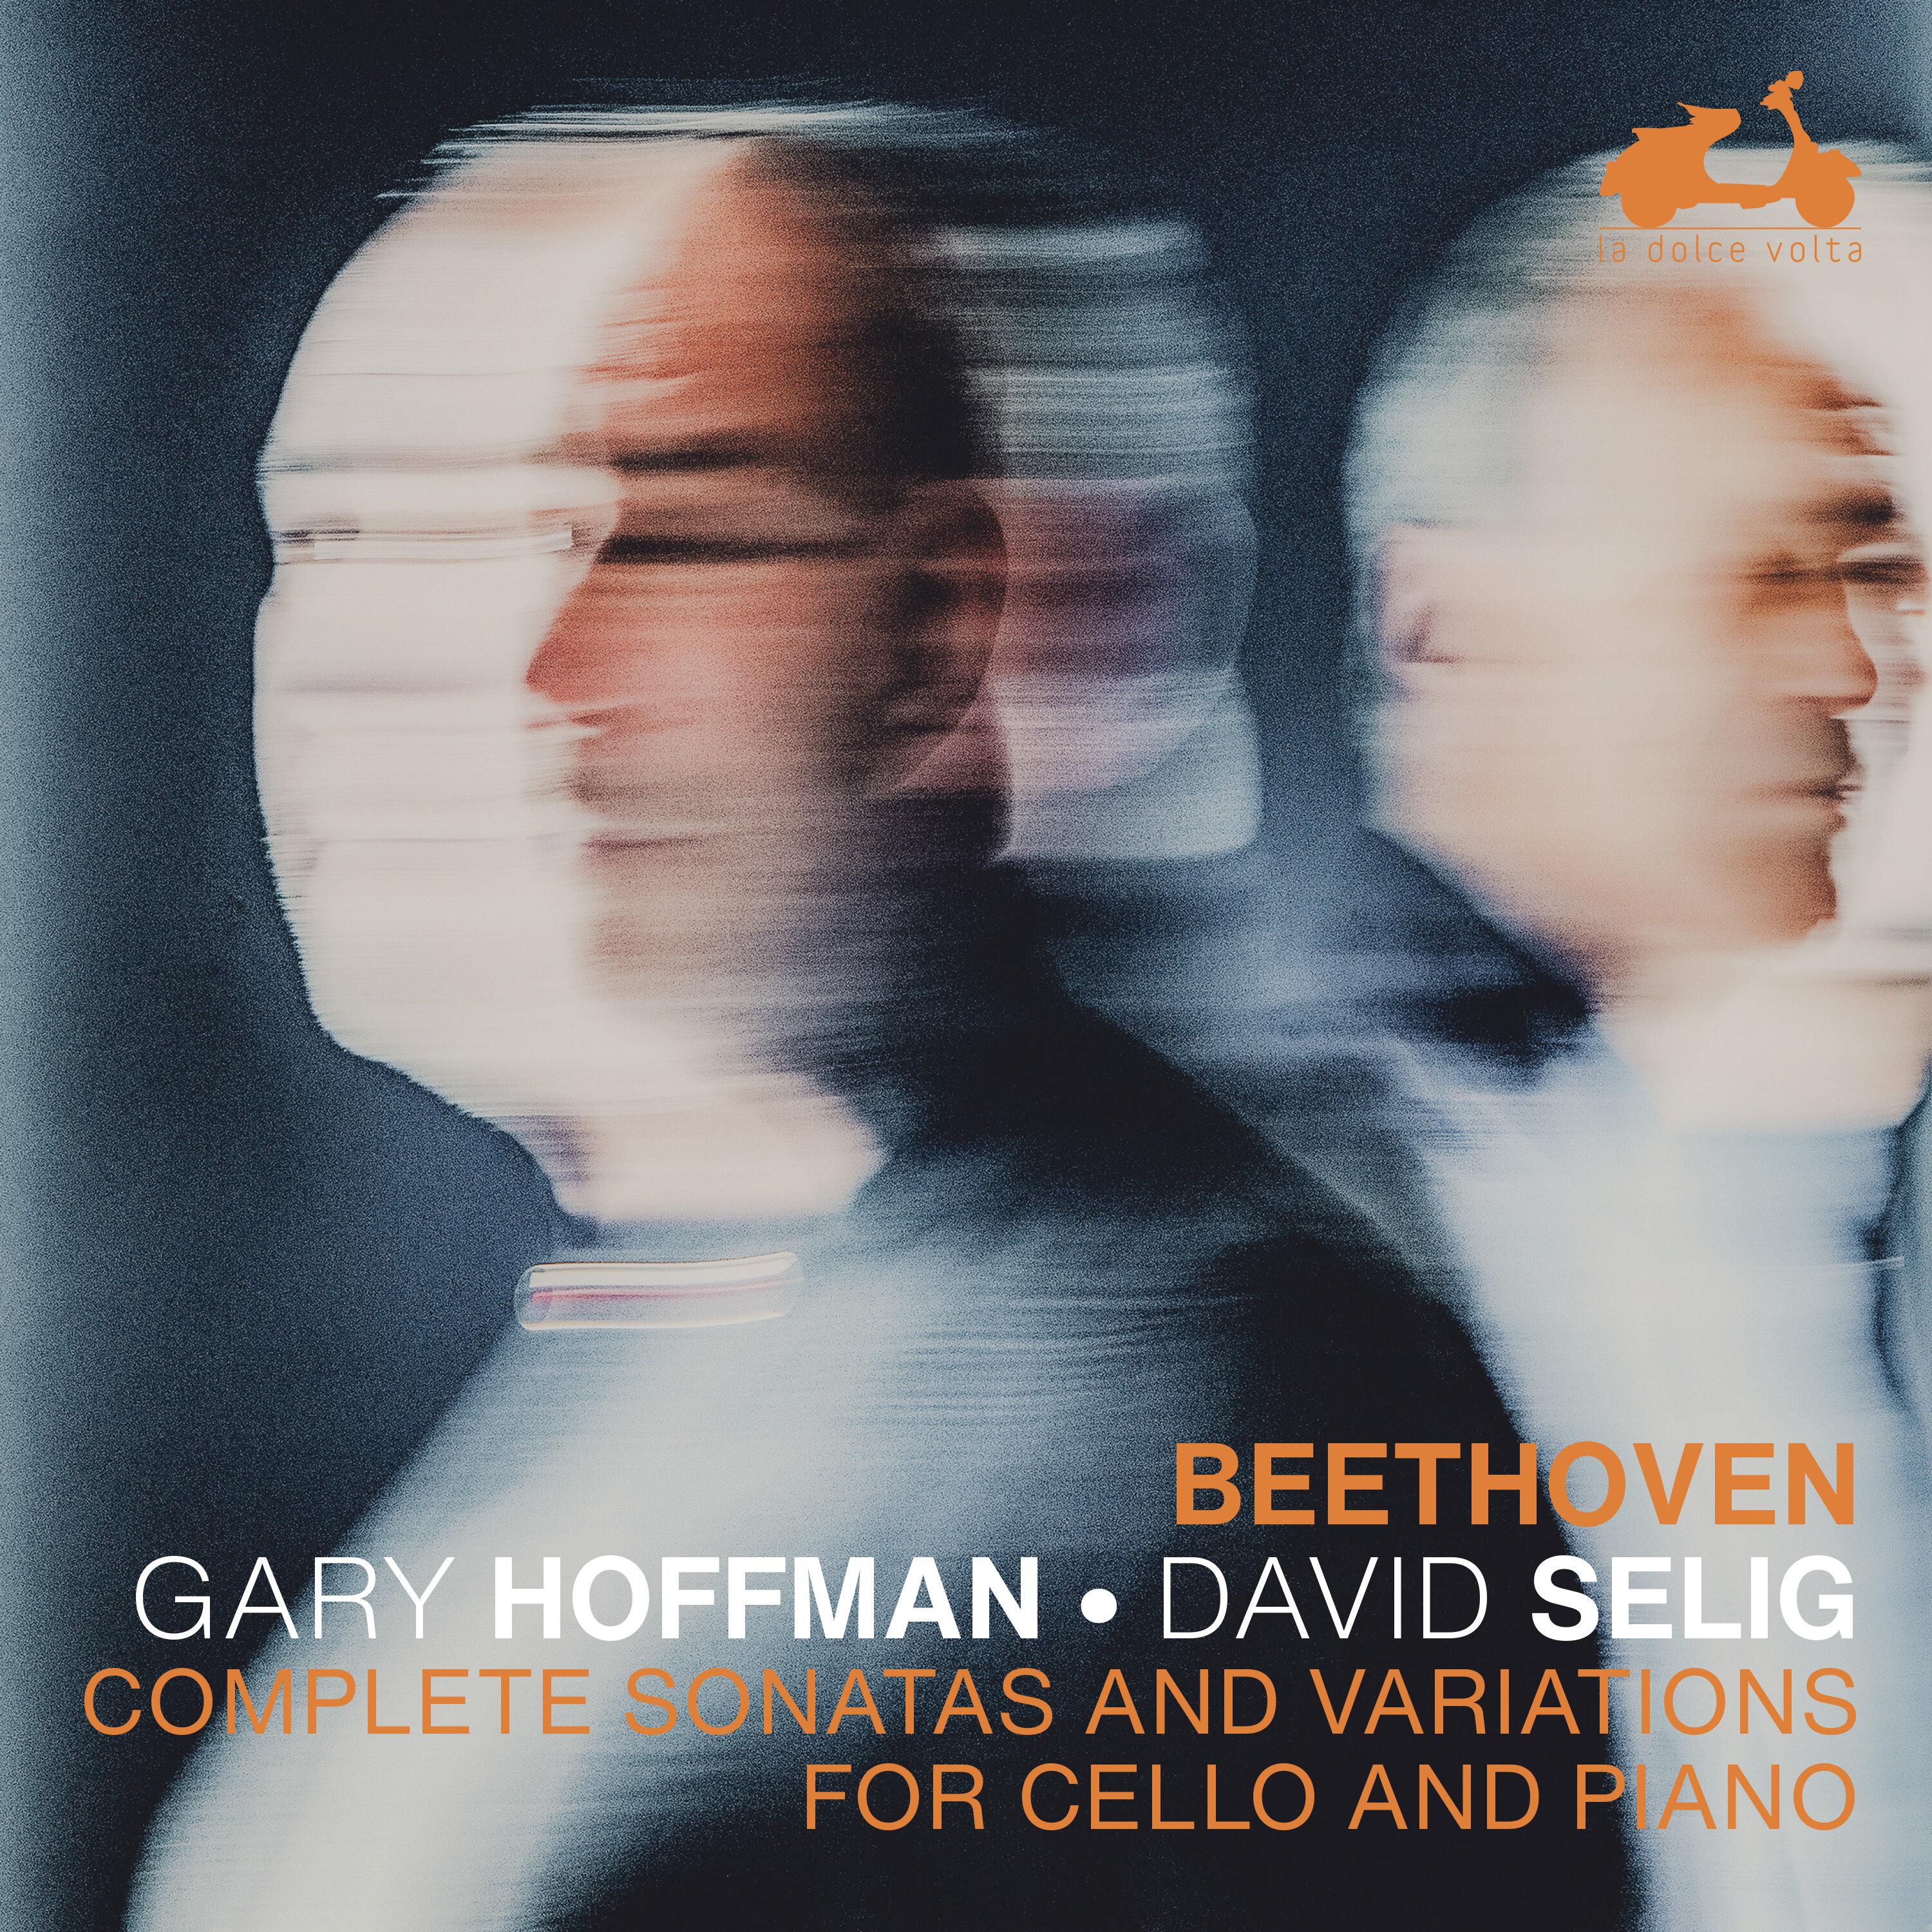 Gary Hoffman - Sonata for Cello and Piano No. 4 in C Major, Op. 102/1: II. Adagio - Tempo d'andante - Allegro vivace